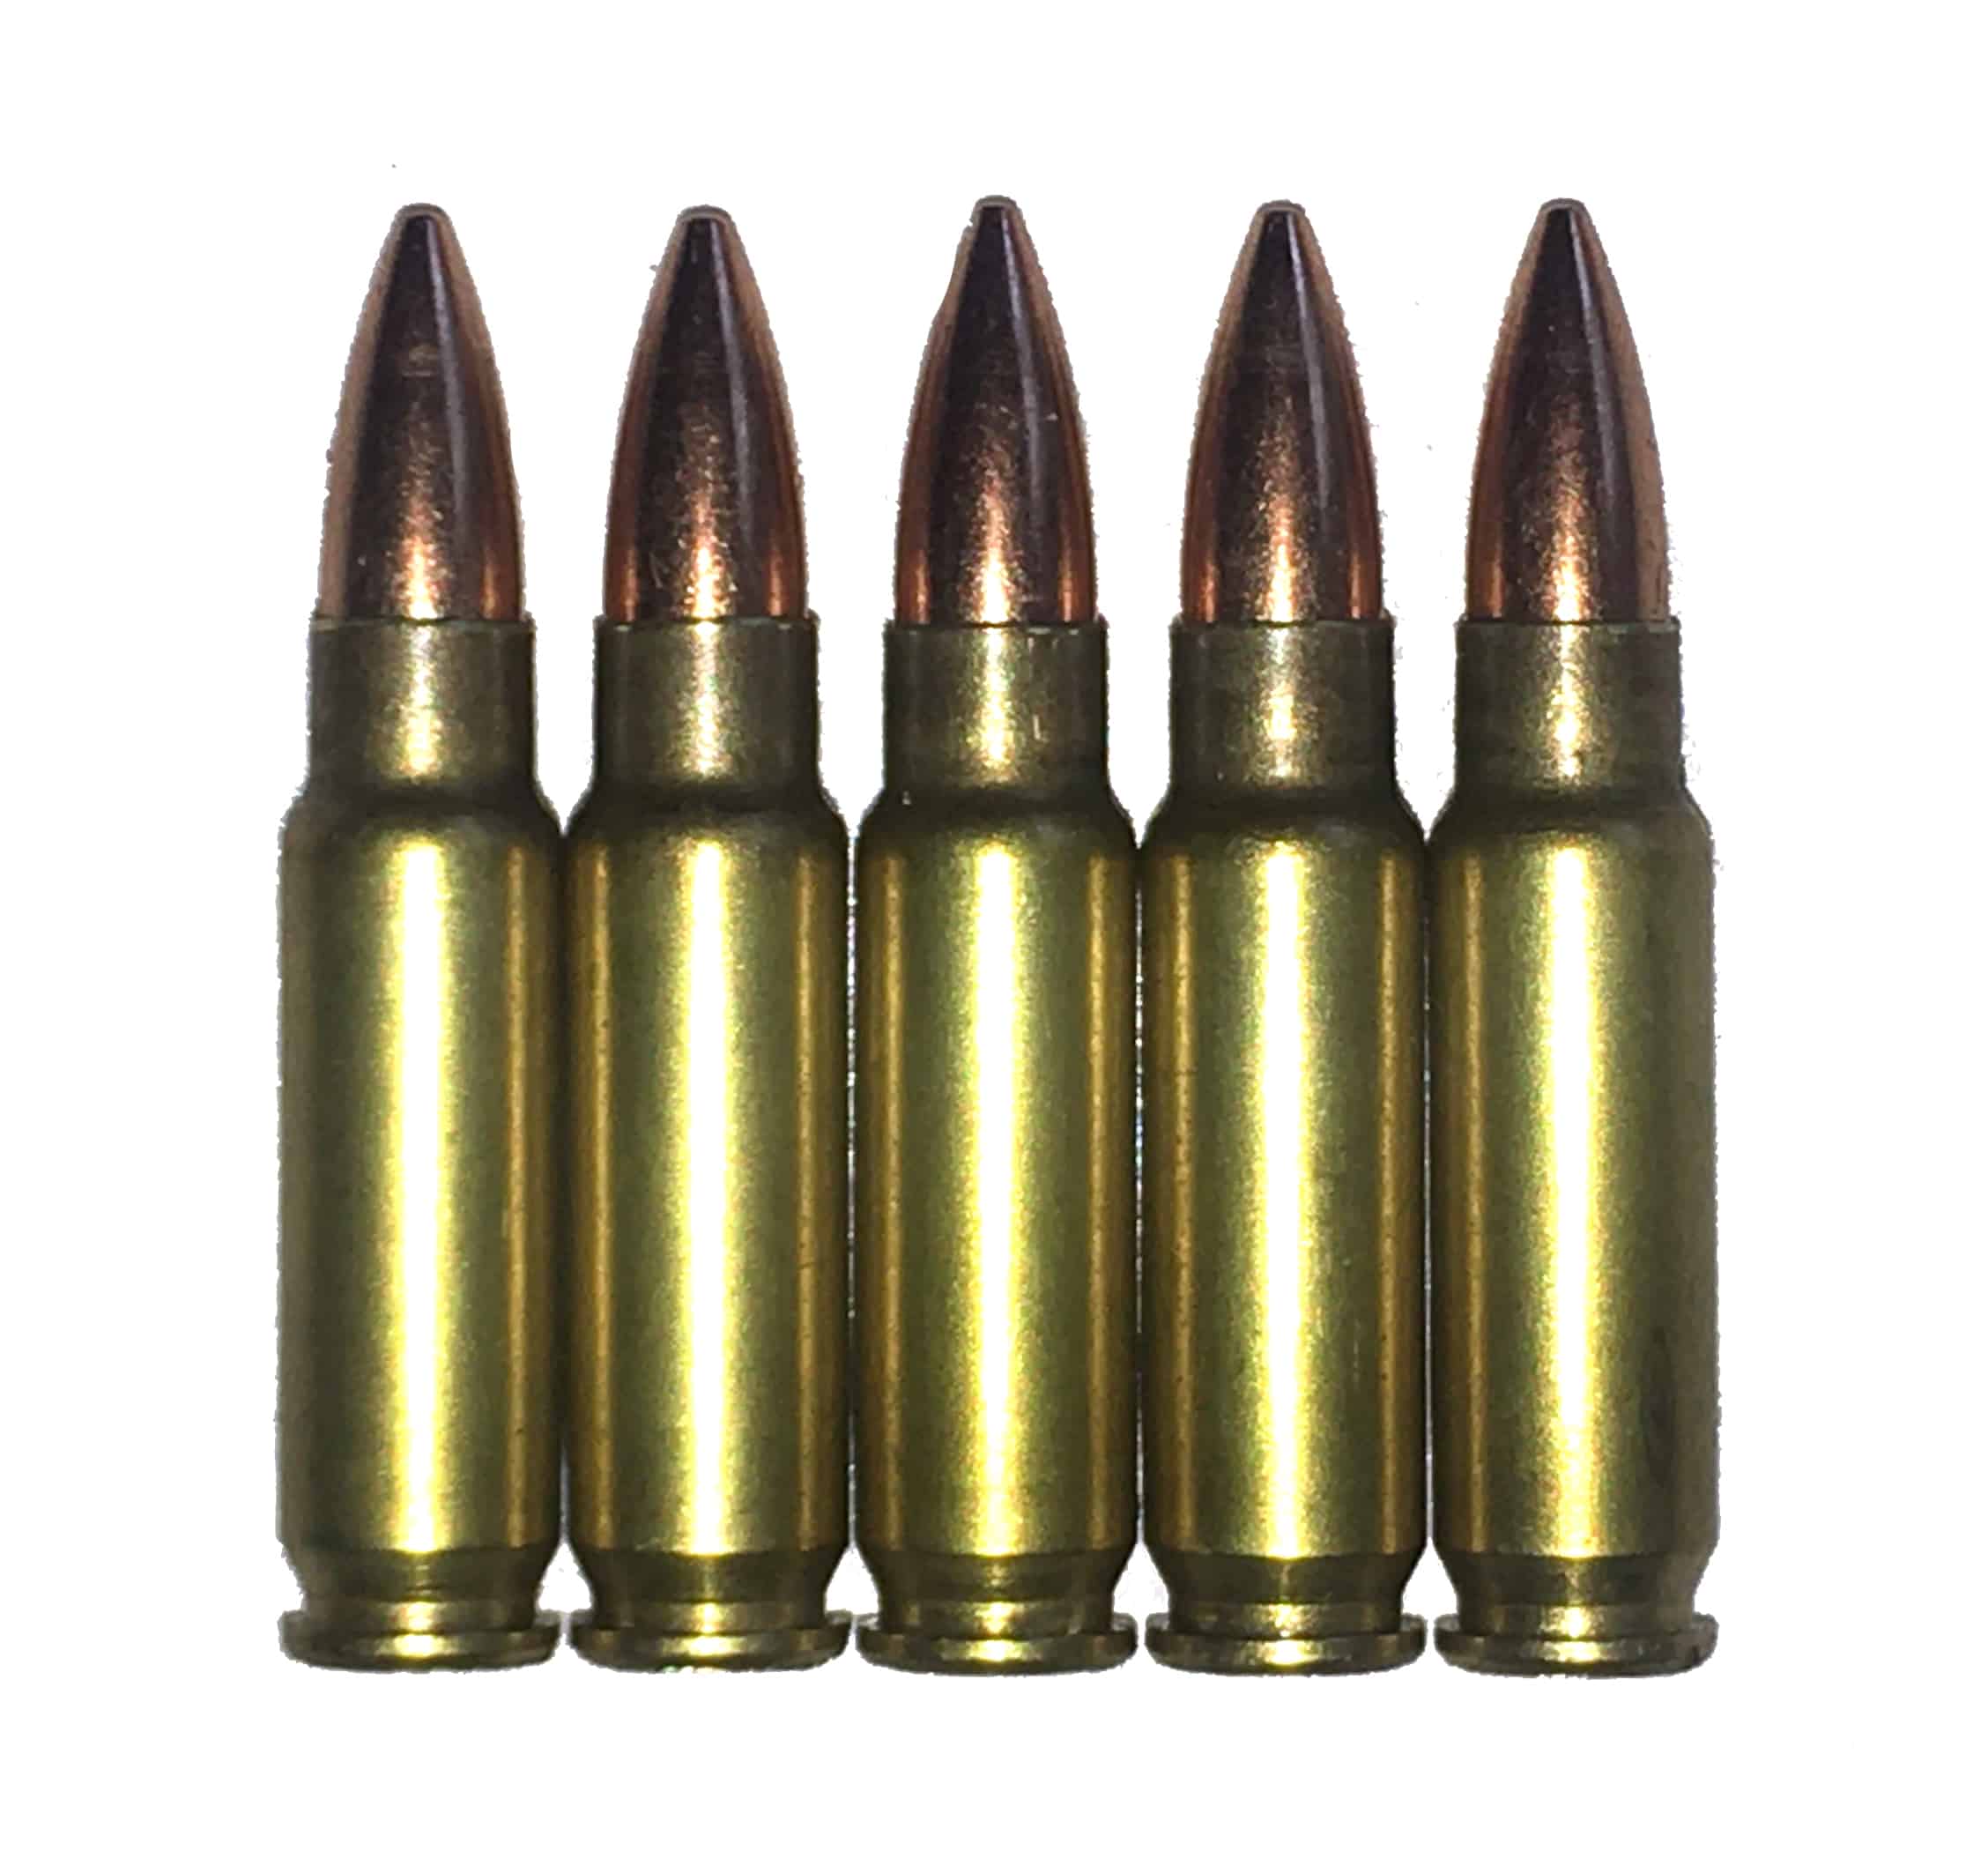 FN 5.7x28 Dummy Rounds Snap Caps Fake Bullets J&M Spec INERT